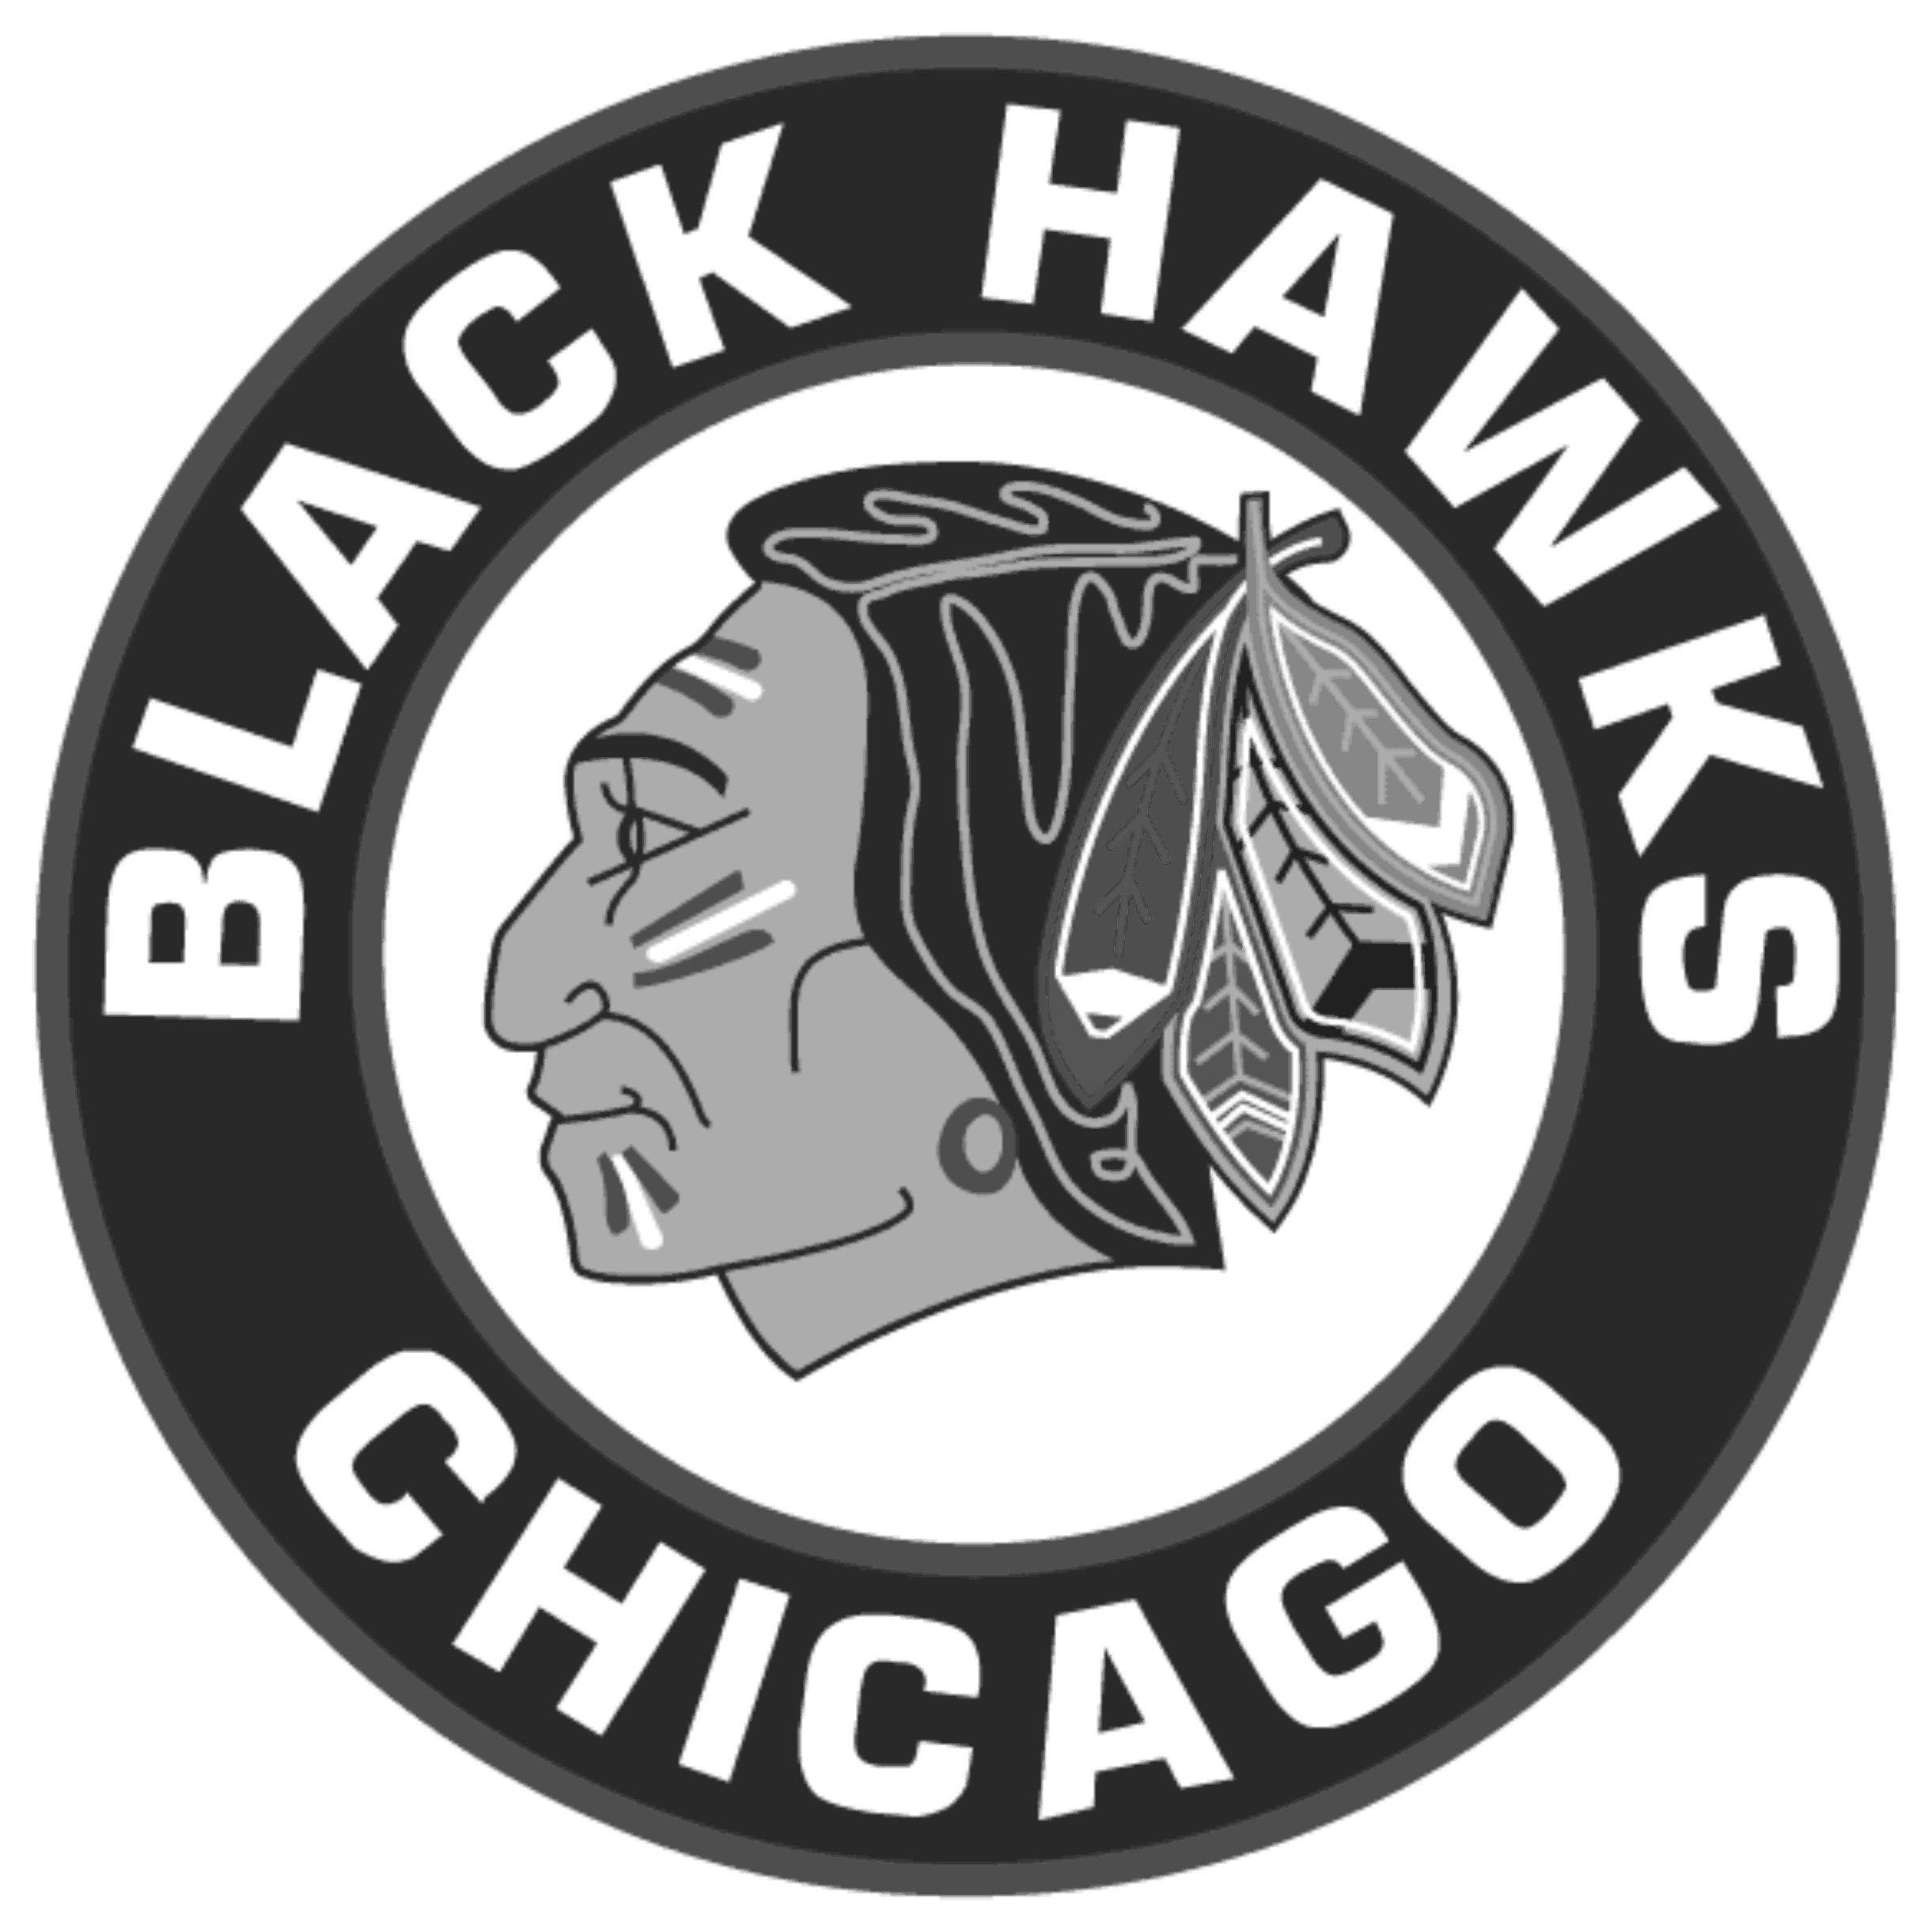 Indian Warrior Logo - ZCommunications » The Chicago Blackhawks, Indian Logos, and the U.S. ...